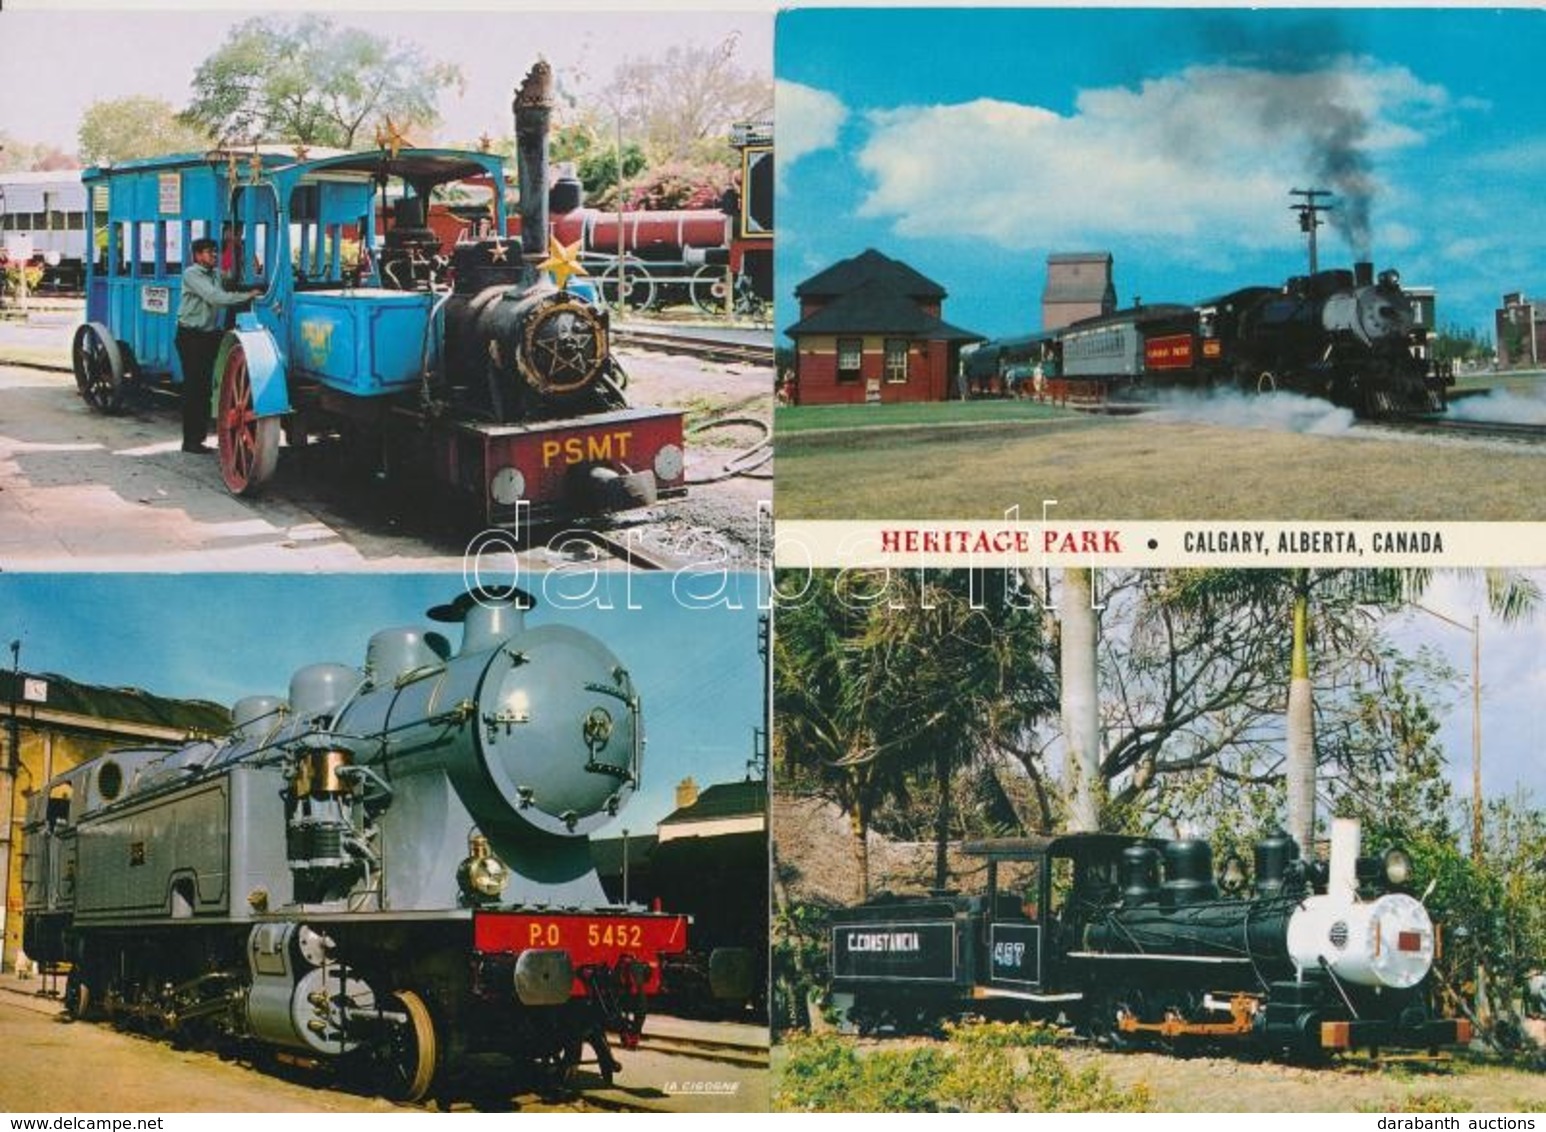 ** 15 Db MODERN Külföldi Vasút Motívumlap Gőzmozdonyokkal / 15 Modern European Railway Motive Postcards With Locomotives - Zonder Classificatie